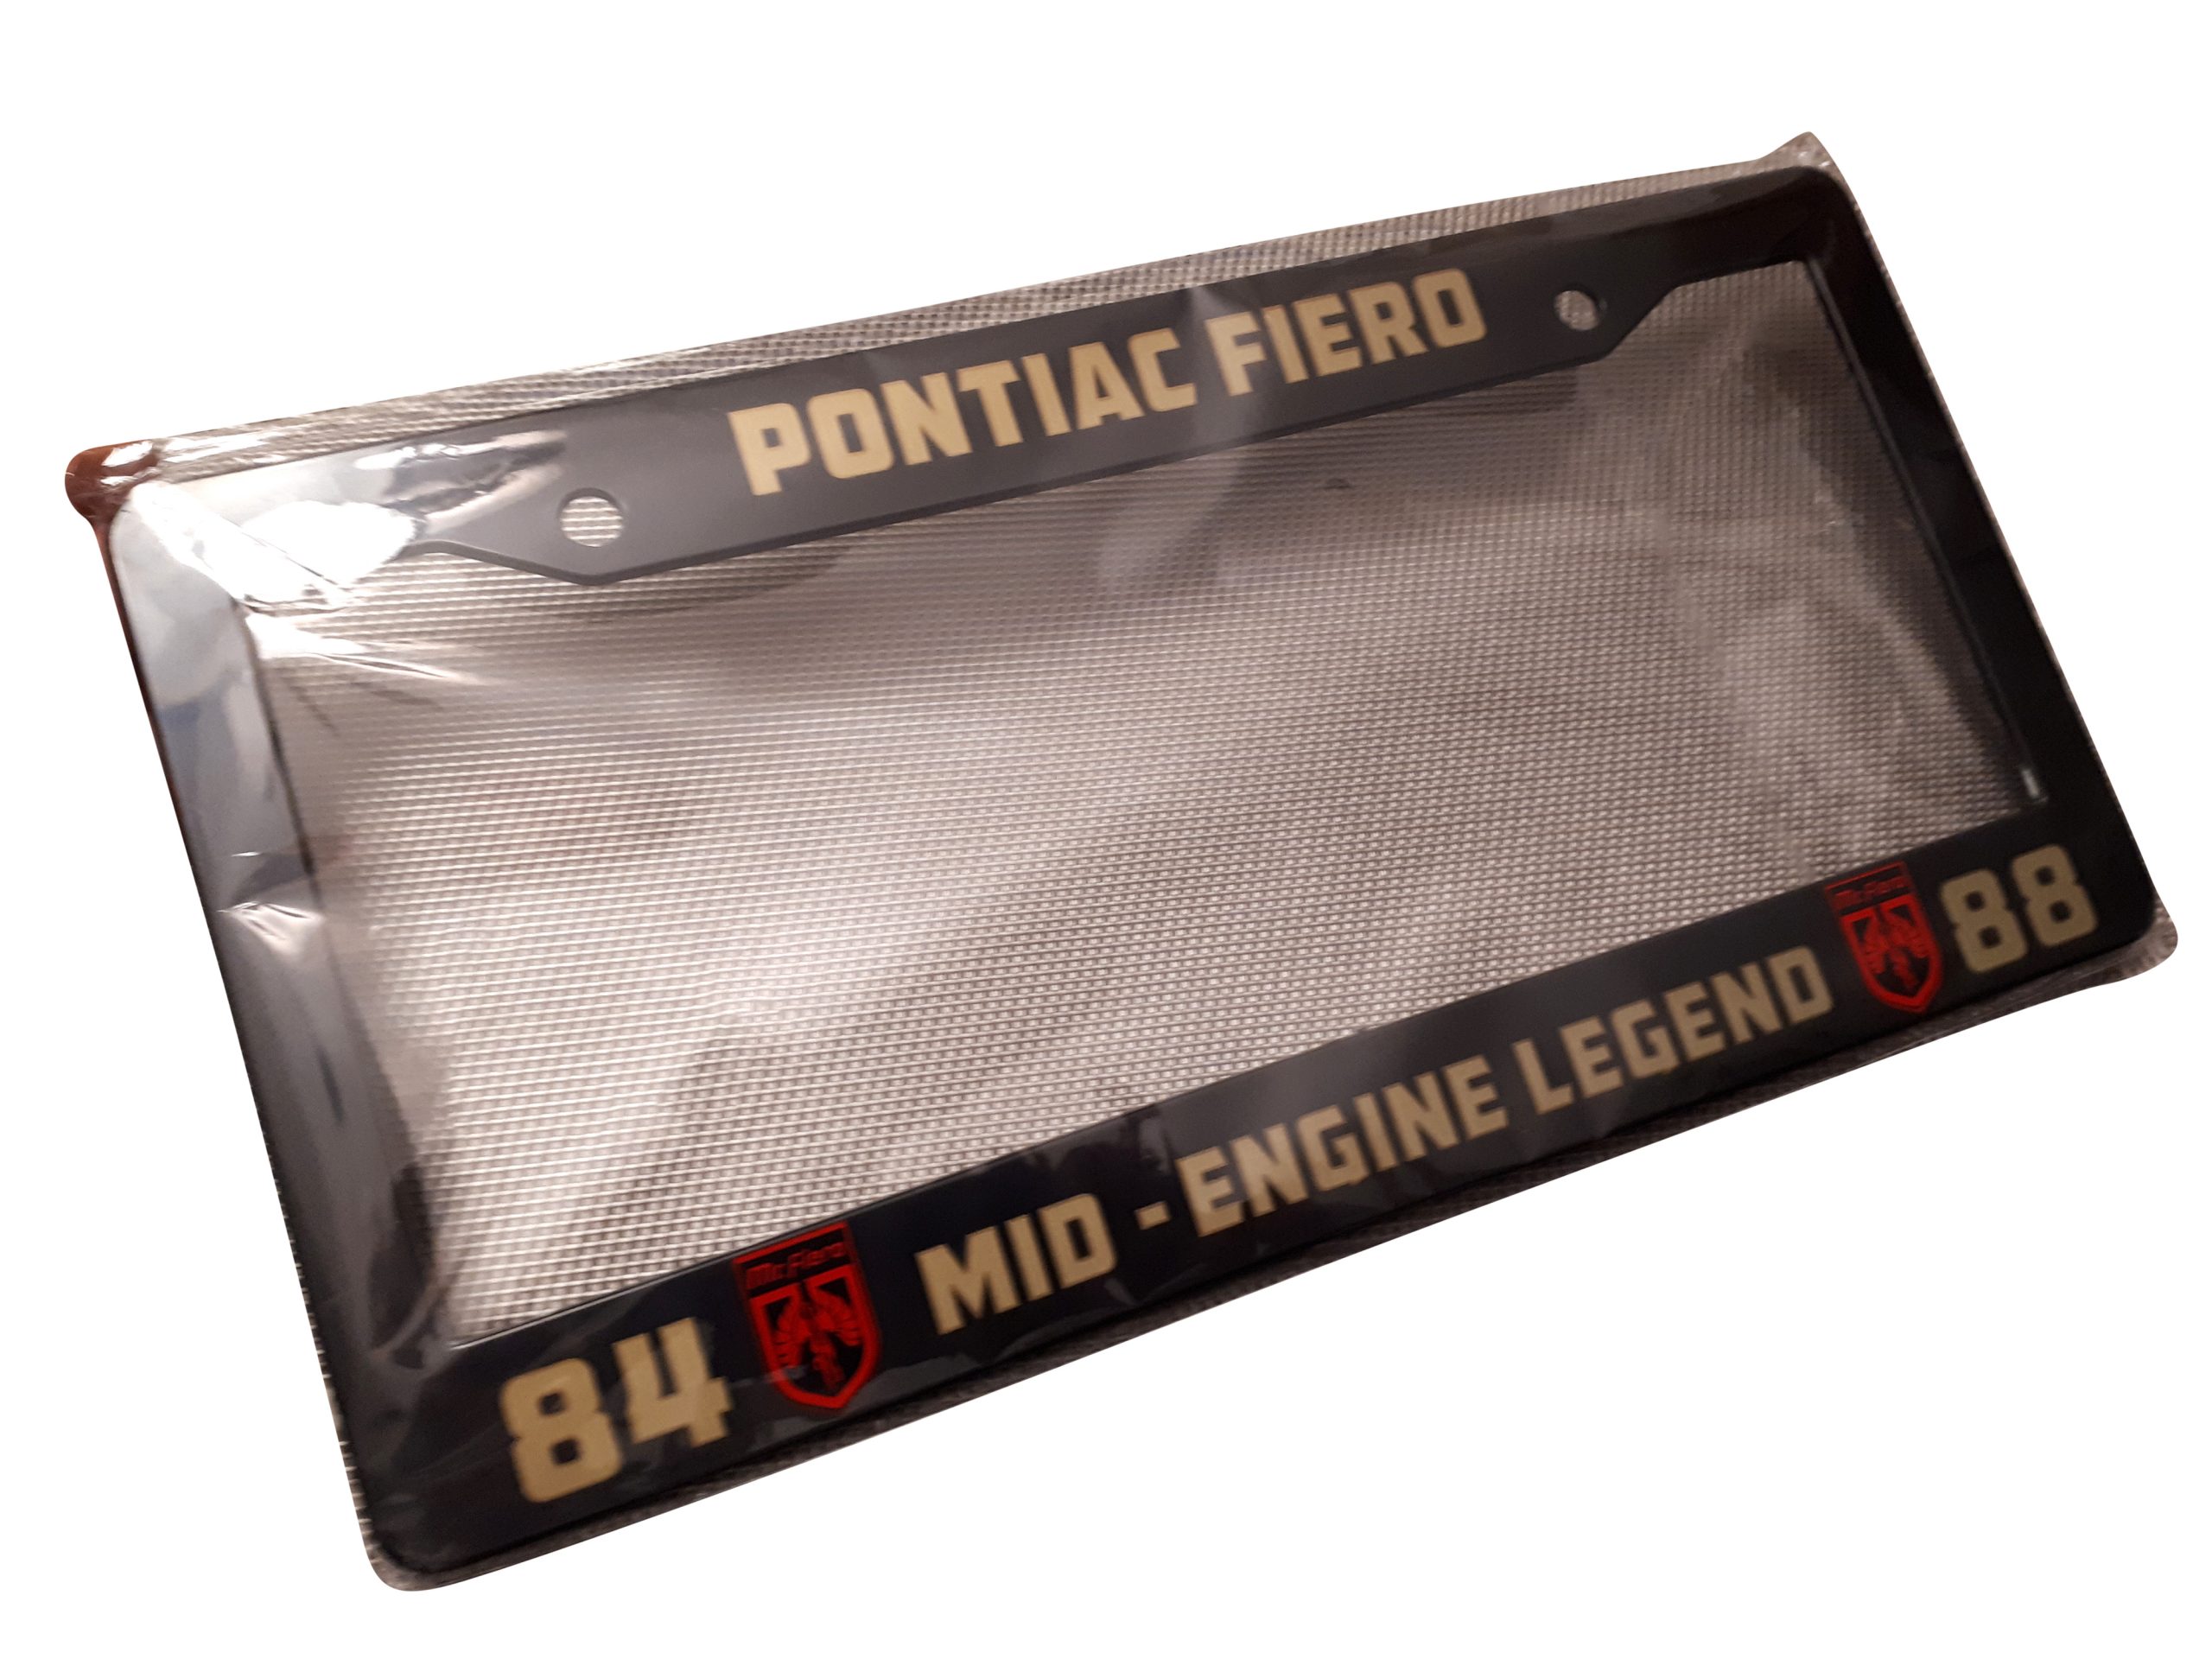 Pontiac Fiero Commemorative License Plate Frame